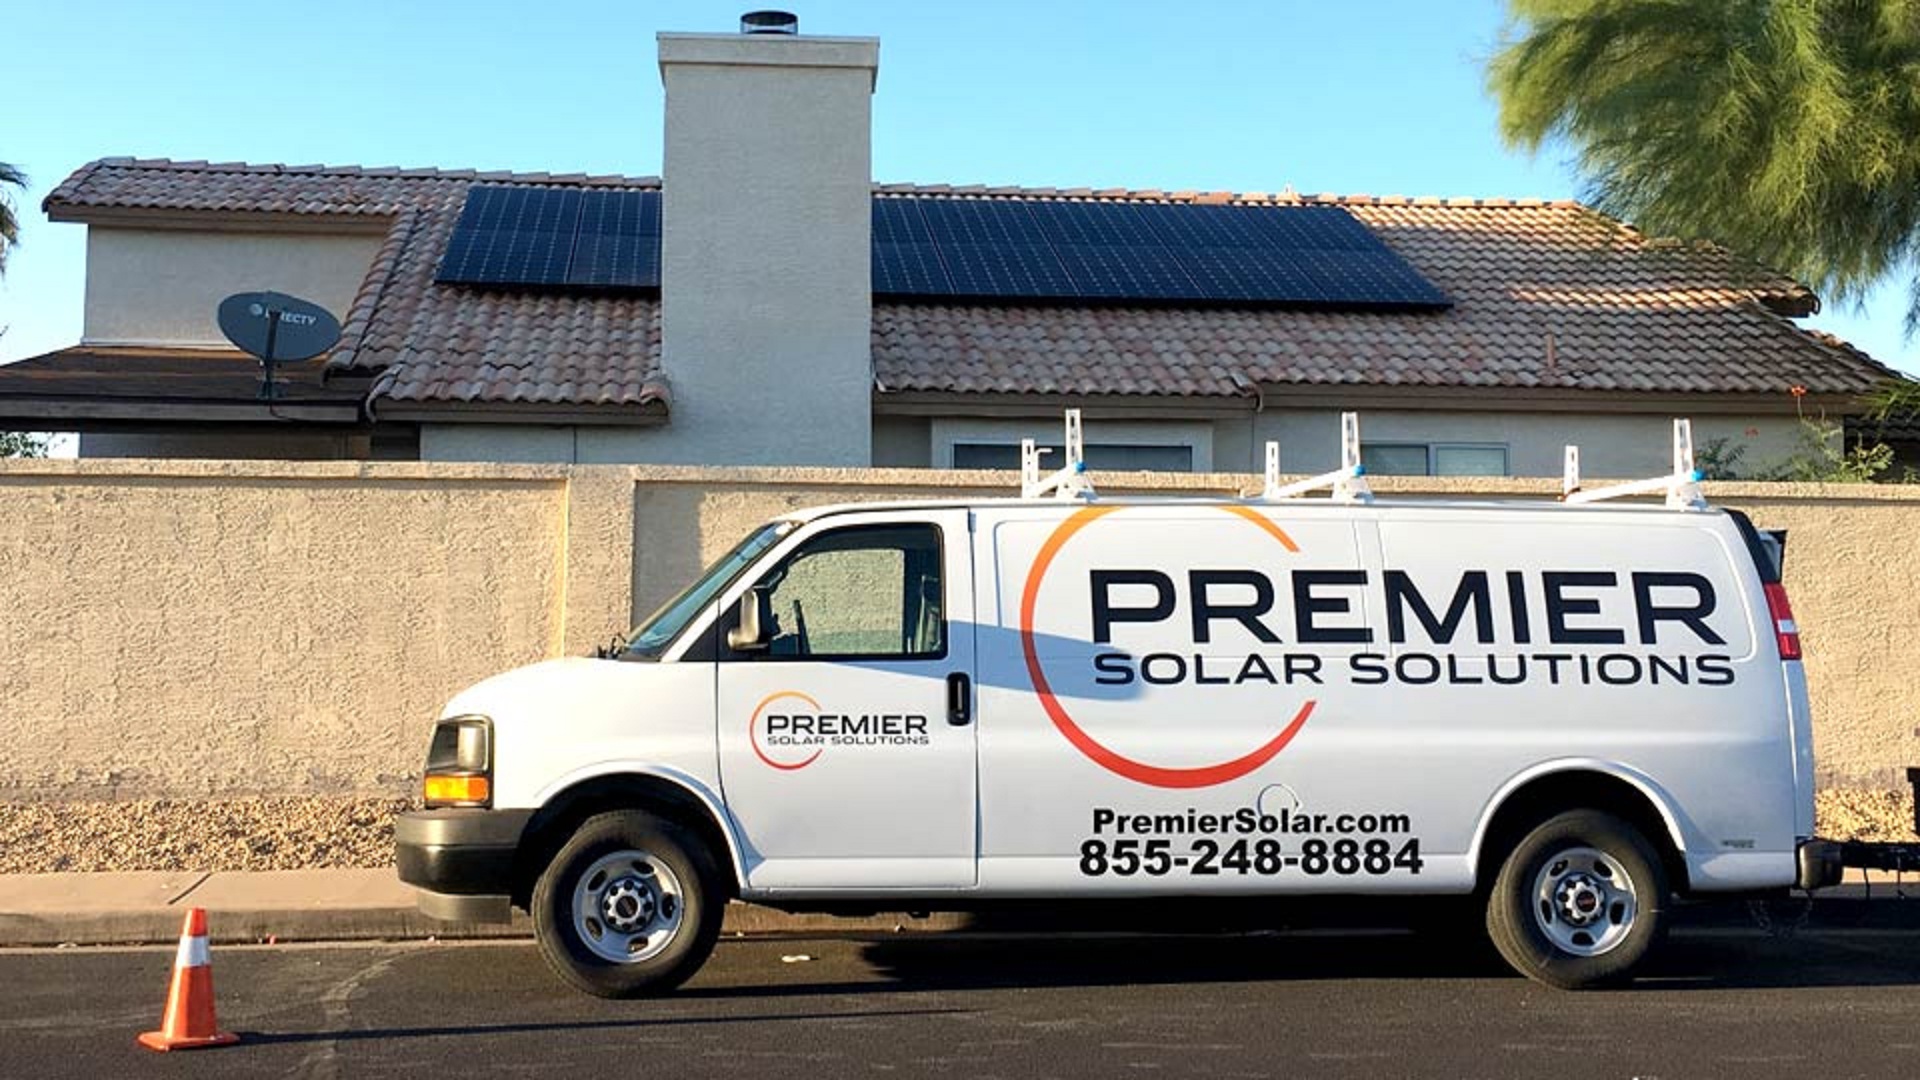 Premier Solar Solutions